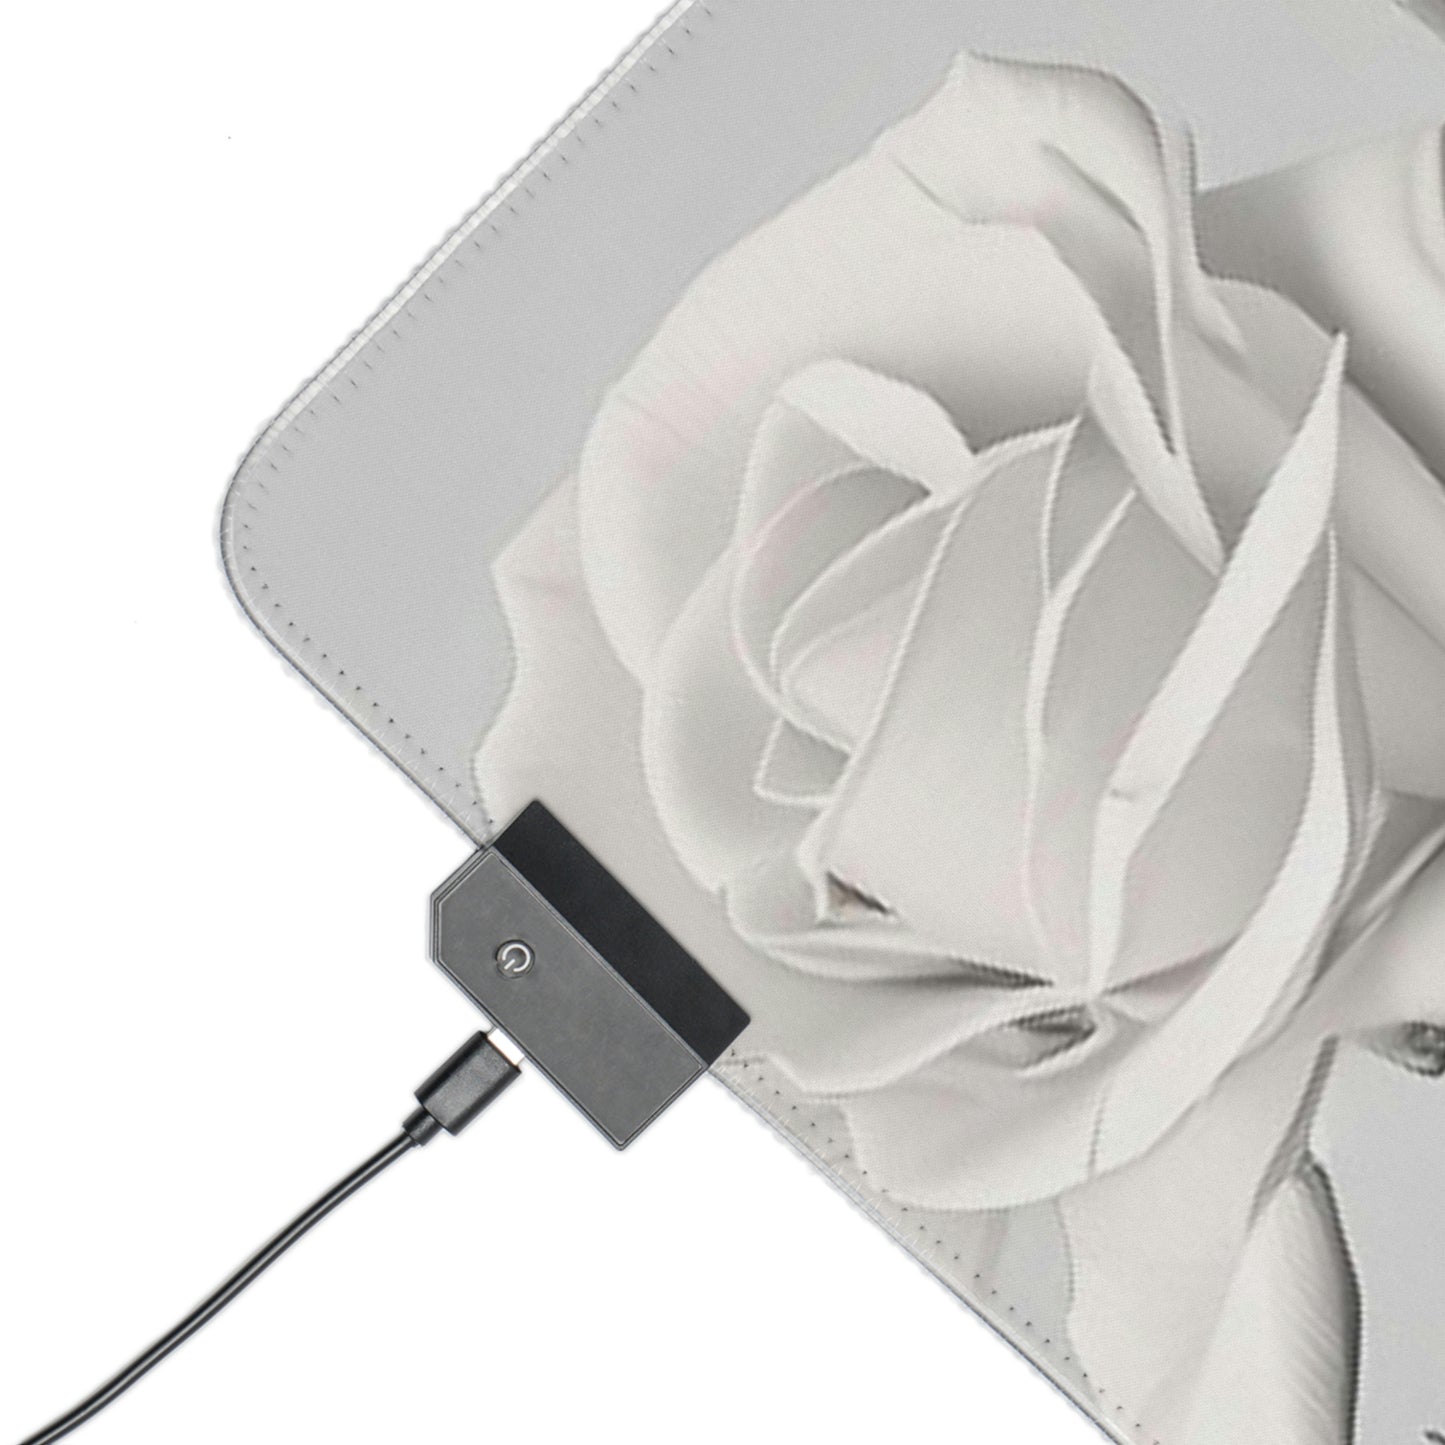 LED Gaming Mouse Pad White Rose 2